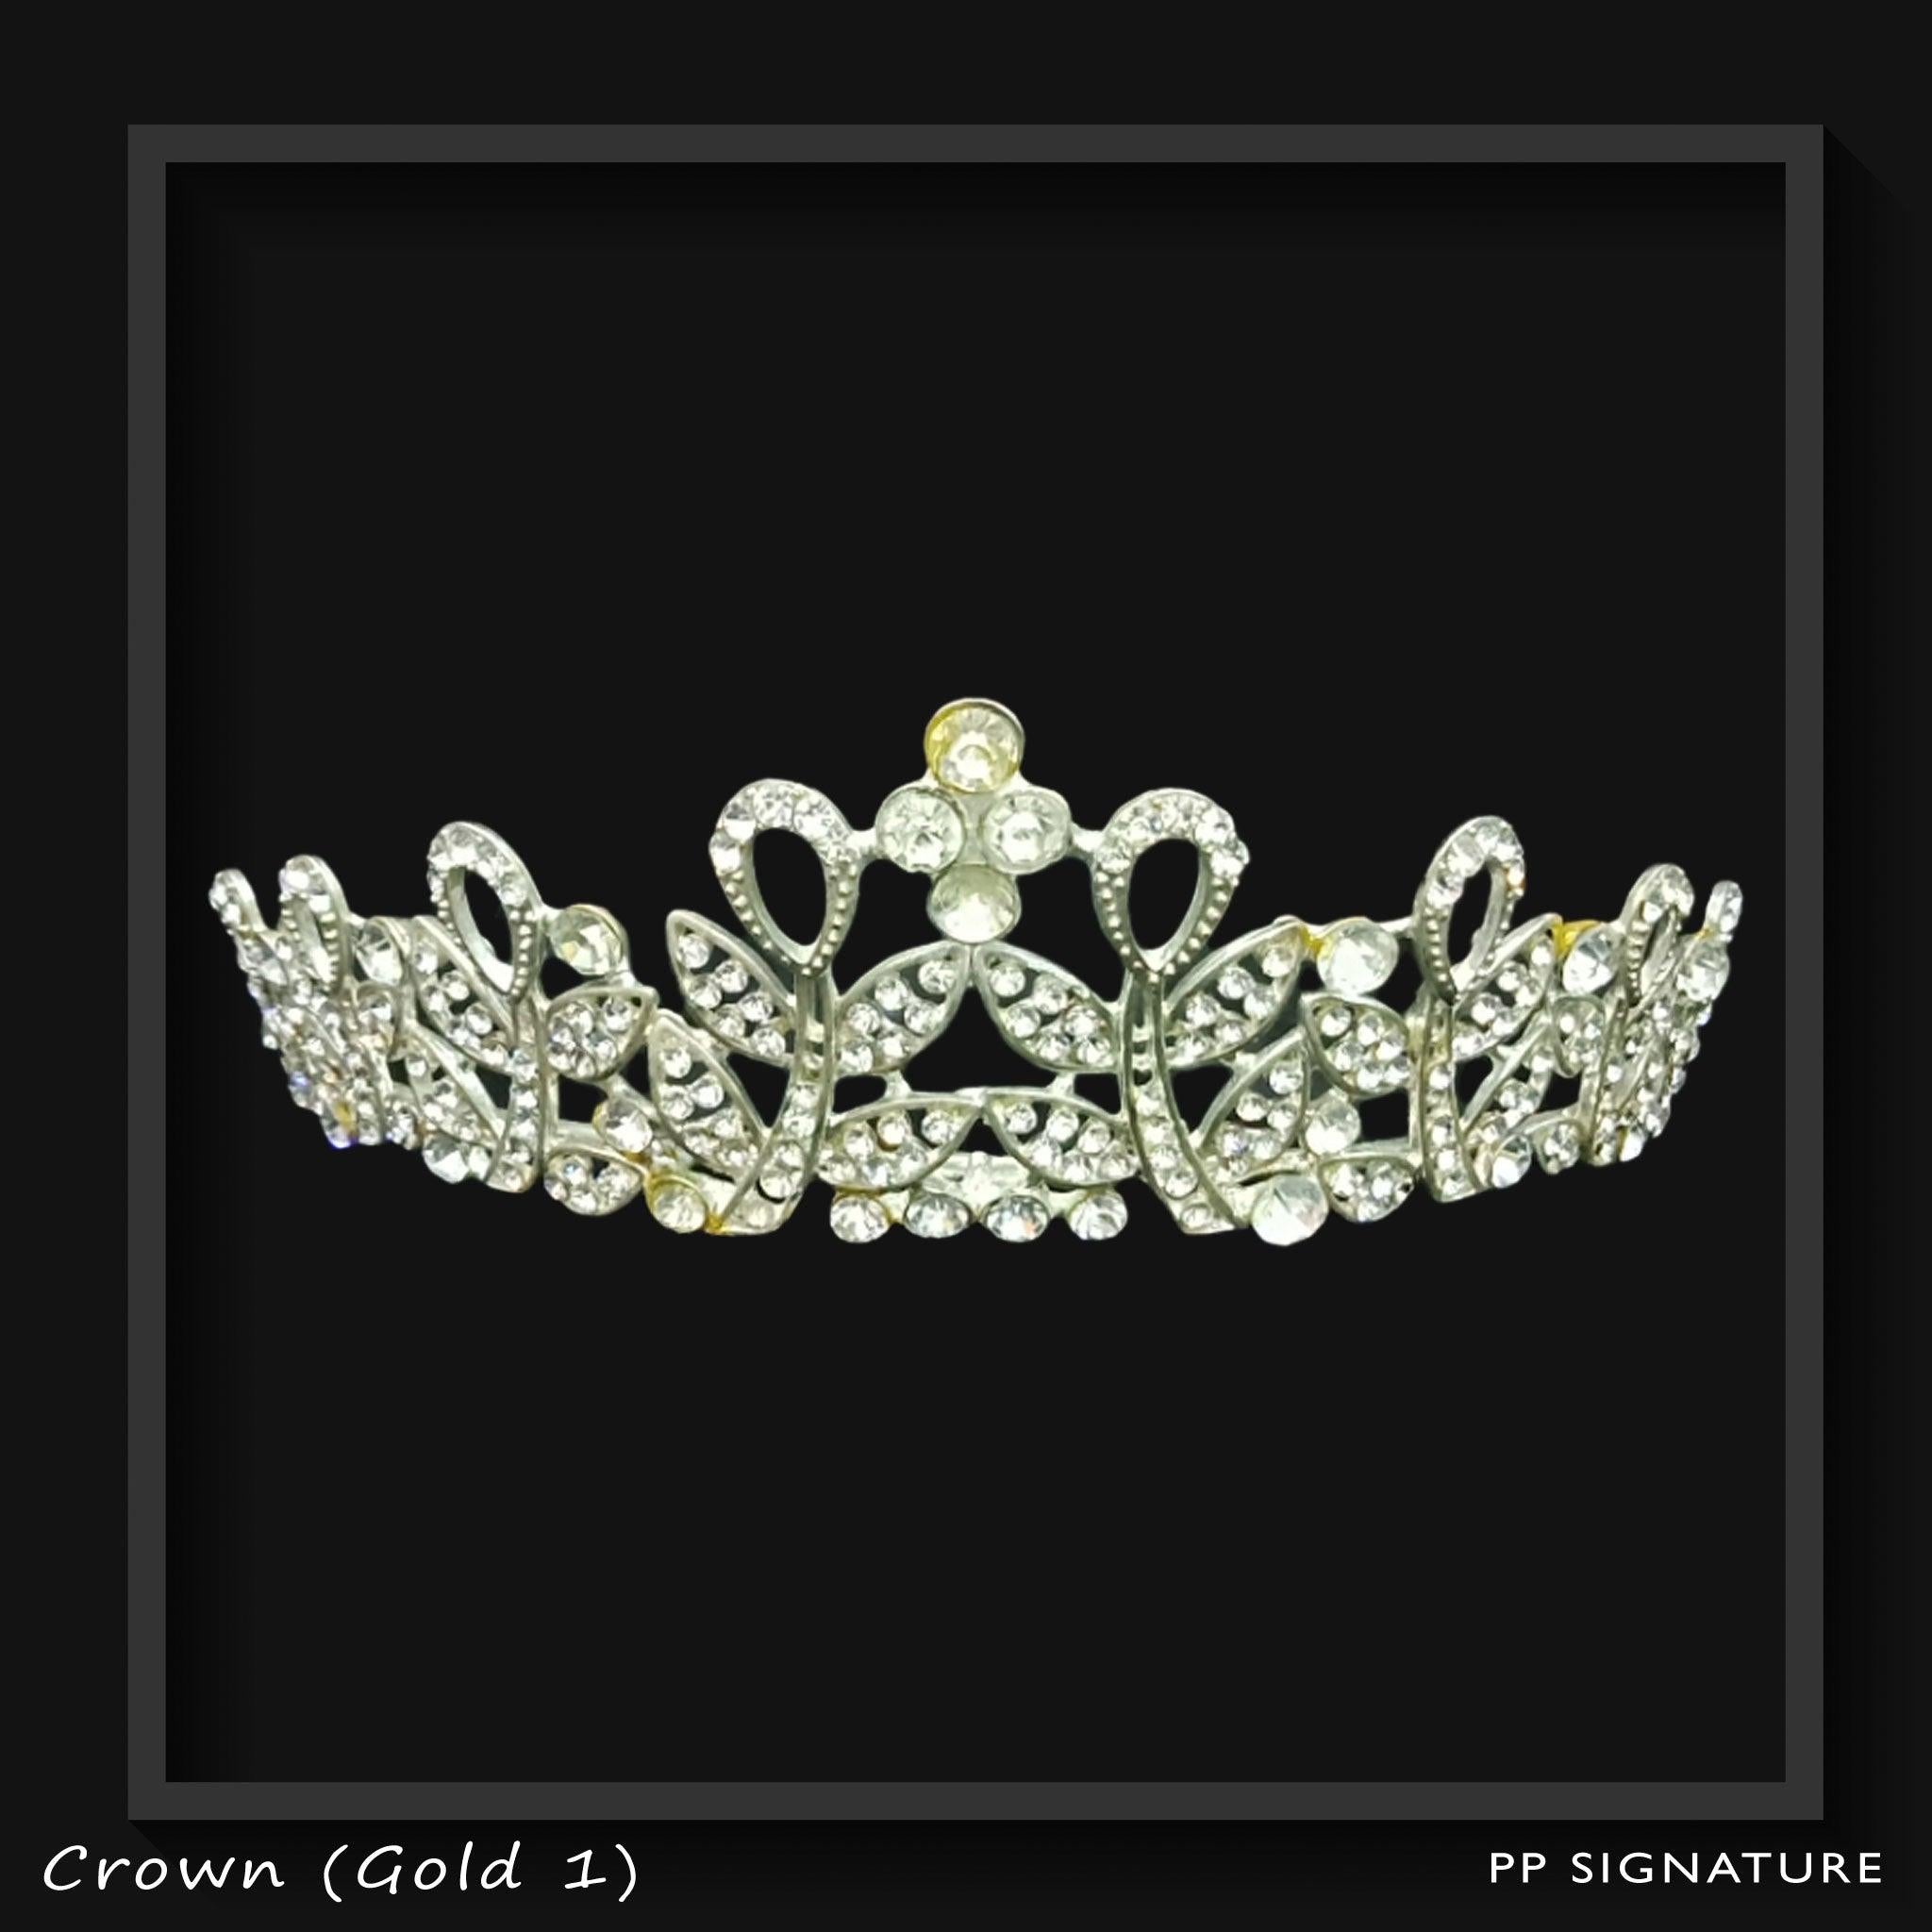 Crown (Gold 1) - PP Signature